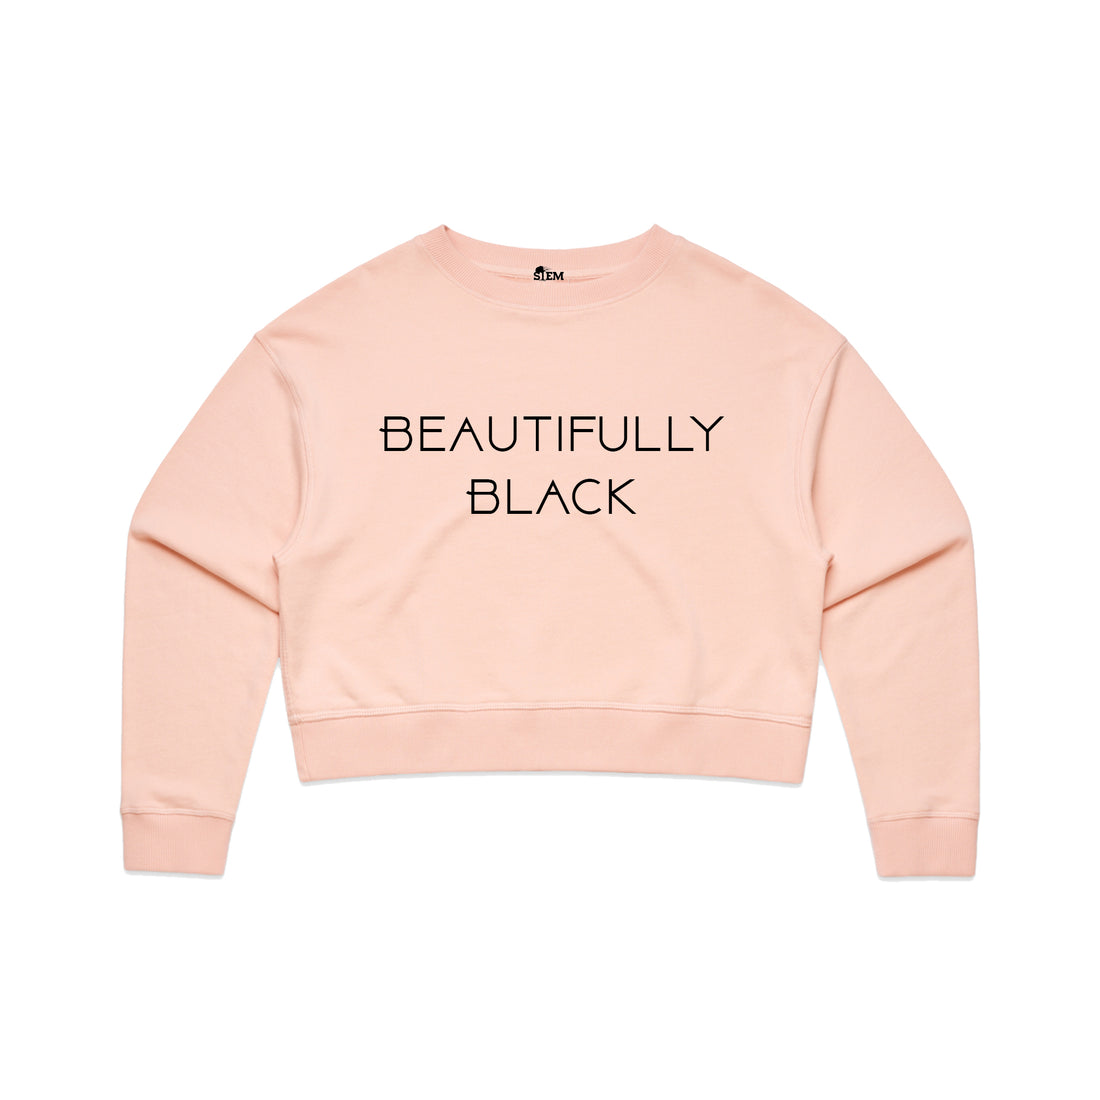 STEM Women's "Beautifully Black" Crop Sweatshirt